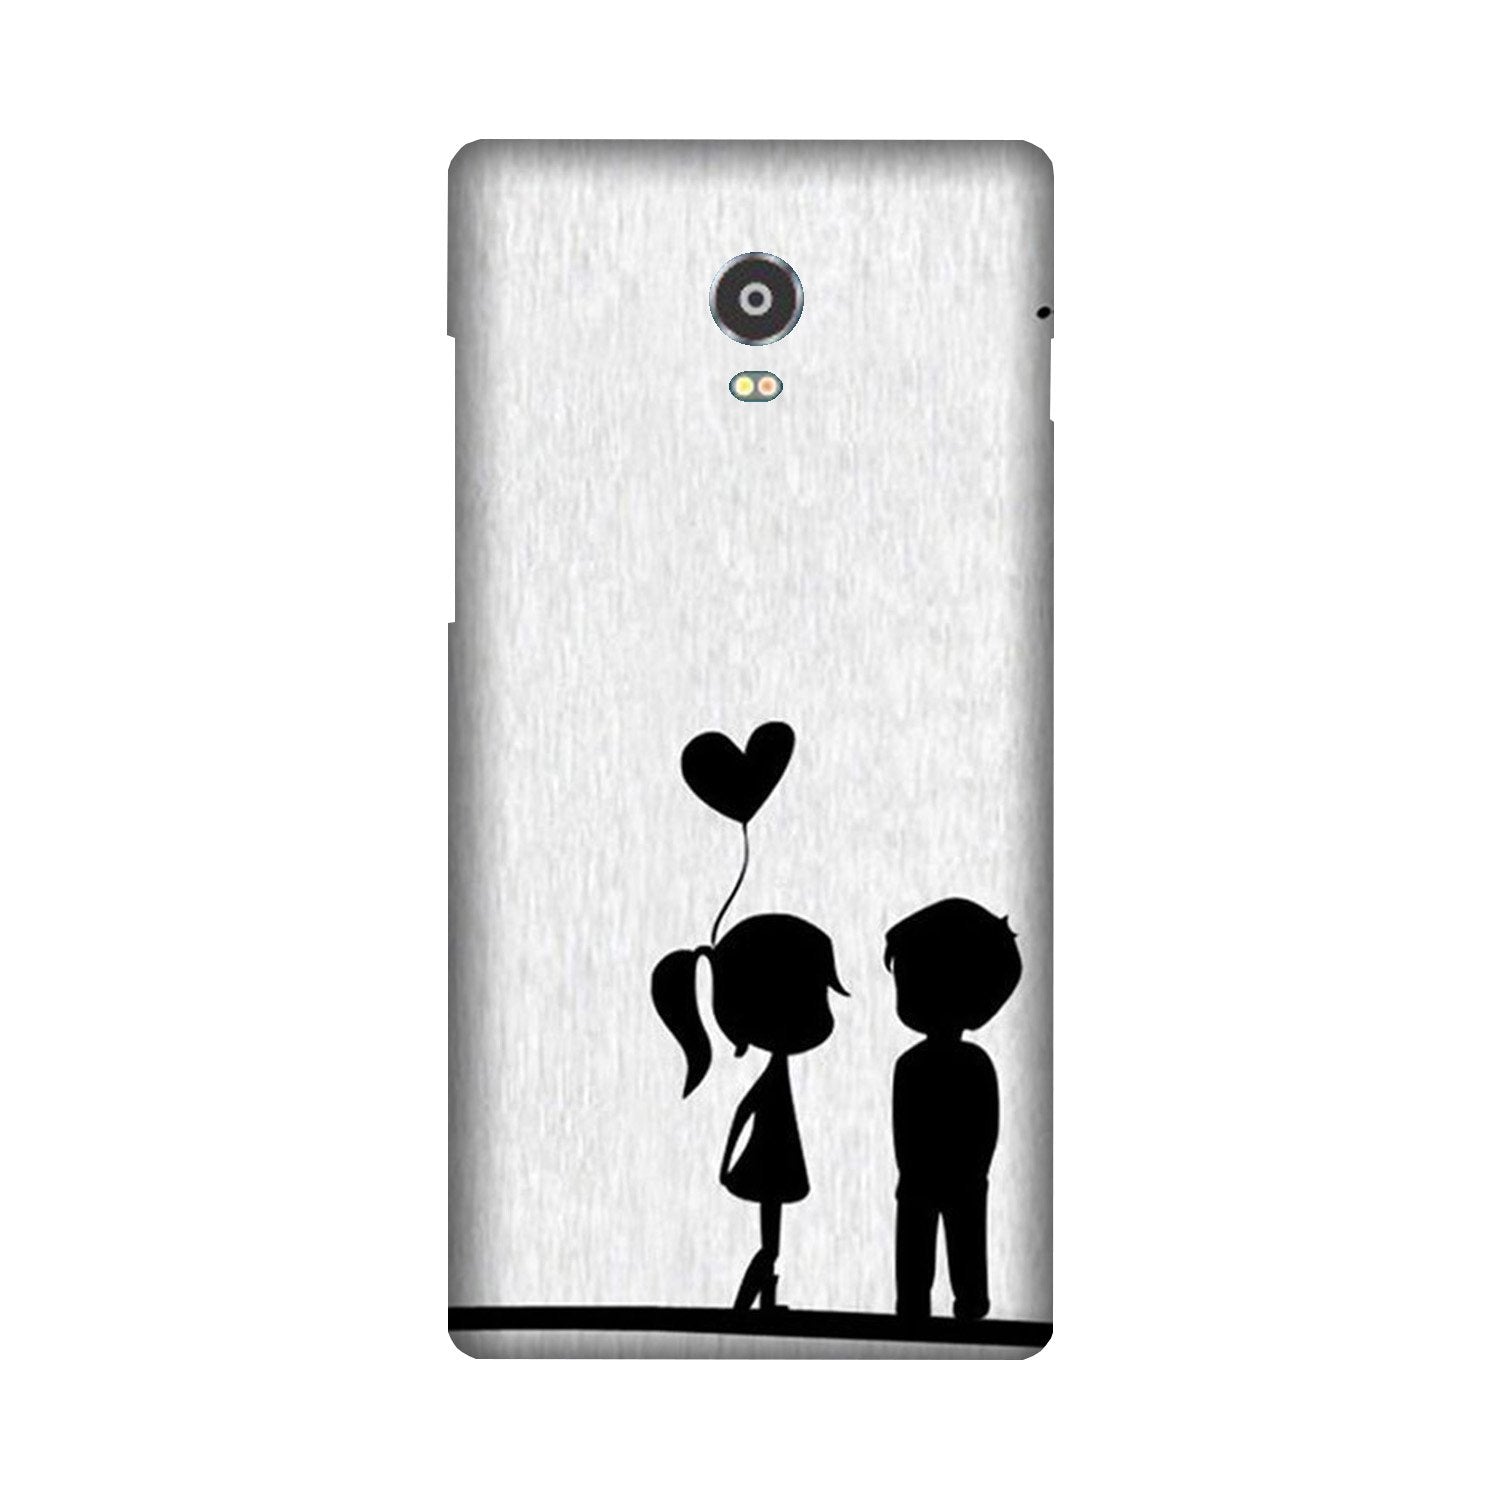 Cute Kid Couple Case for Lenovo Vibe P1 (Design No. 283)